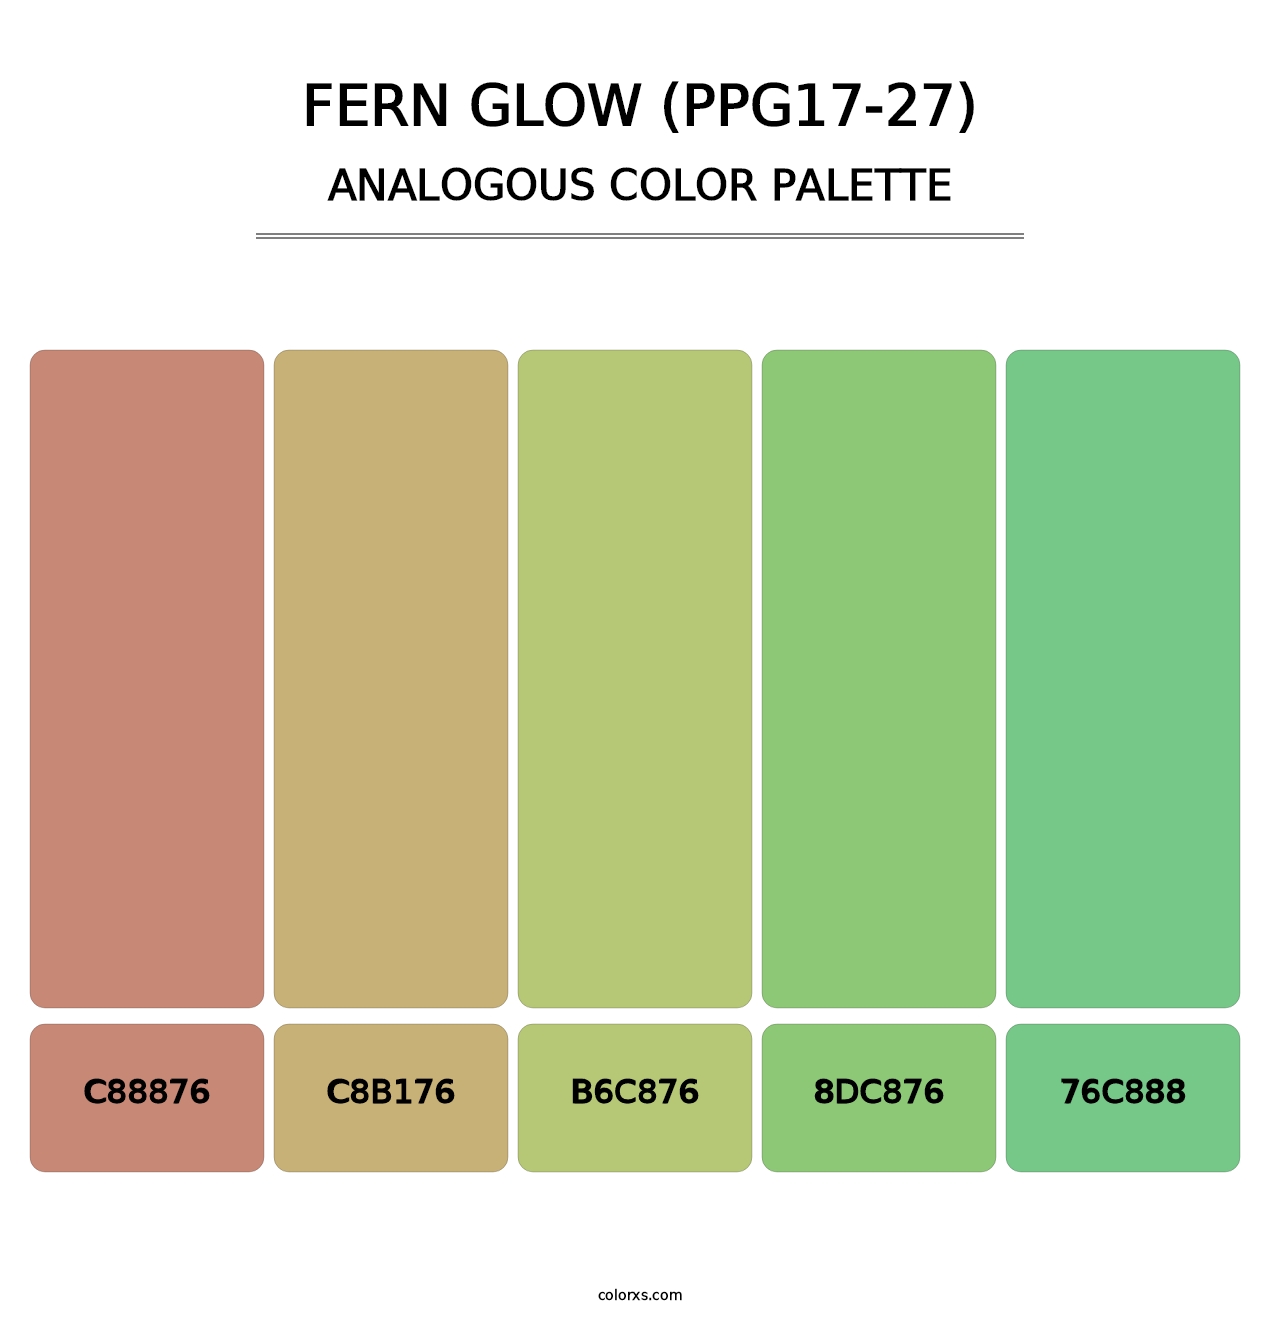 Fern Glow (PPG17-27) - Analogous Color Palette